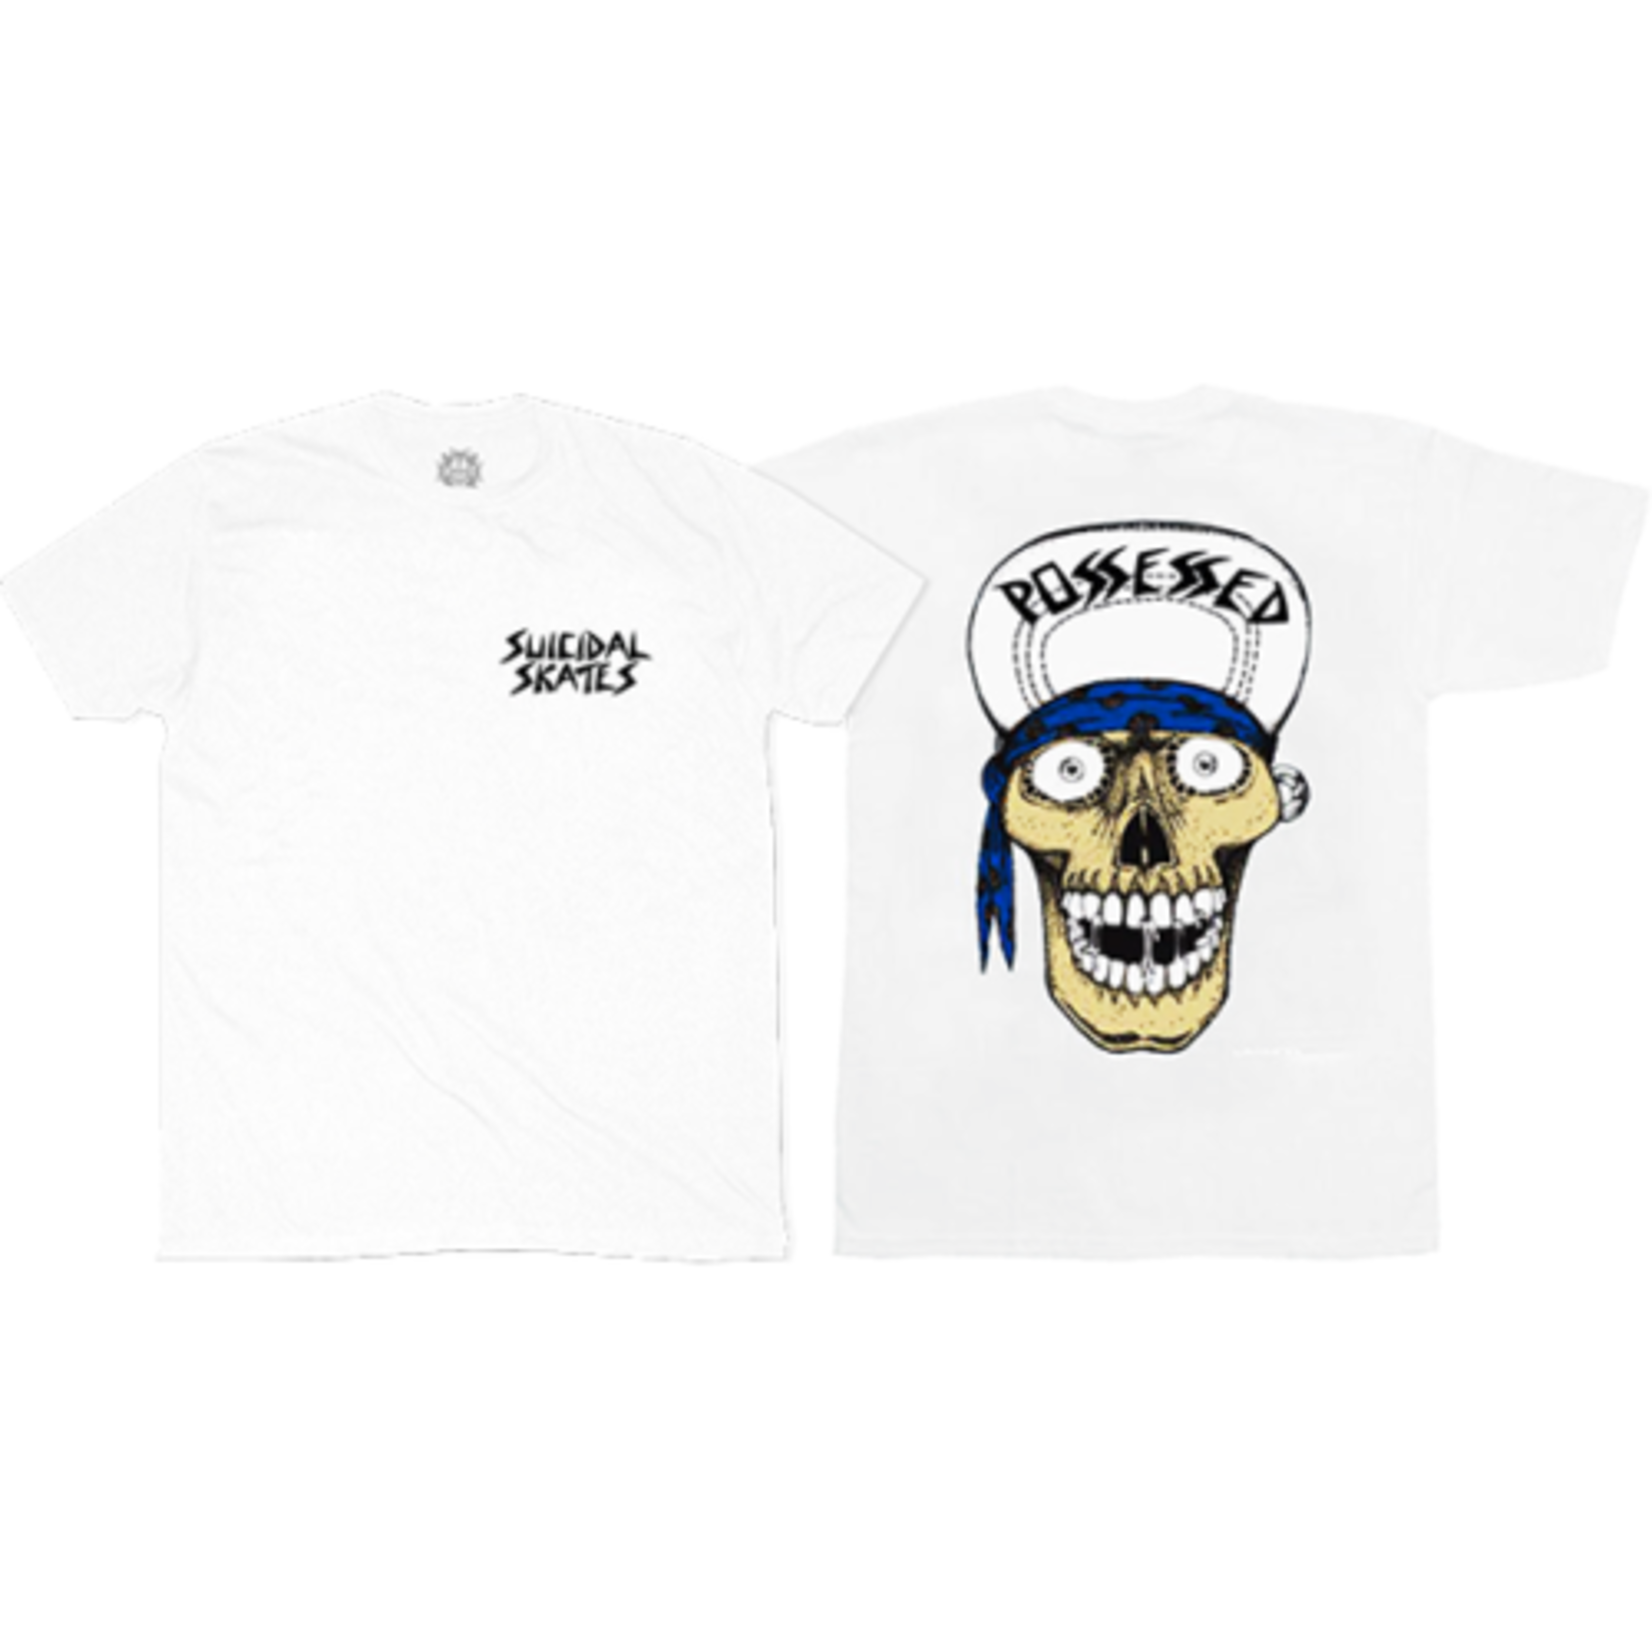 Suicidal Skates Suicidal Skates Punk Skull T-Shirt - White